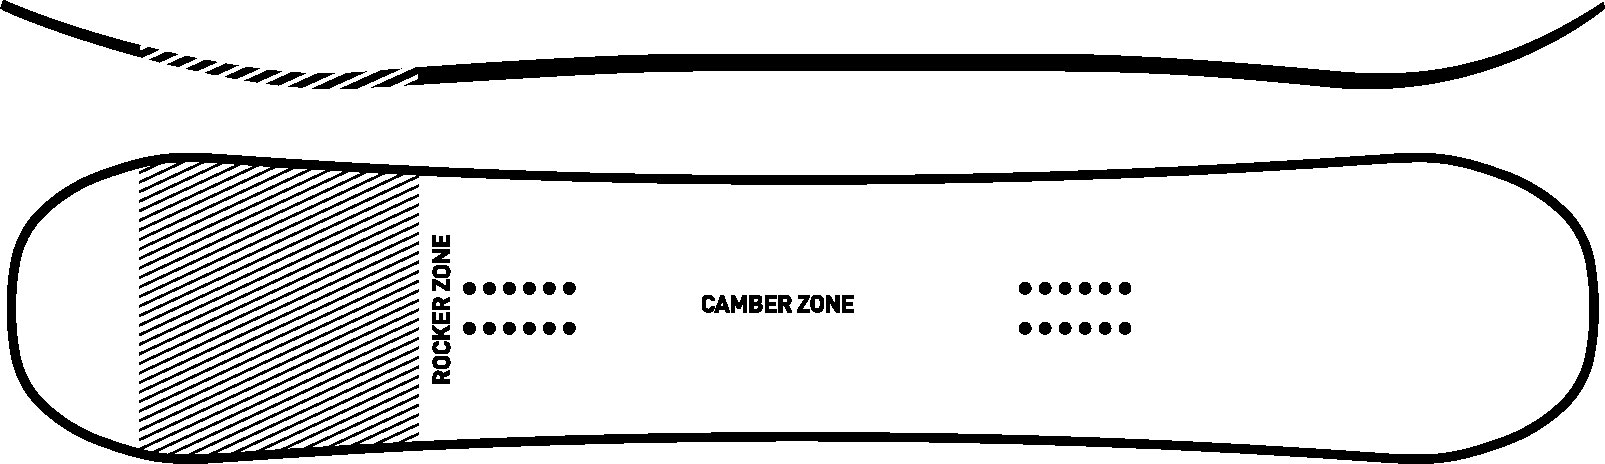 directional-hybrid-camber.jpg